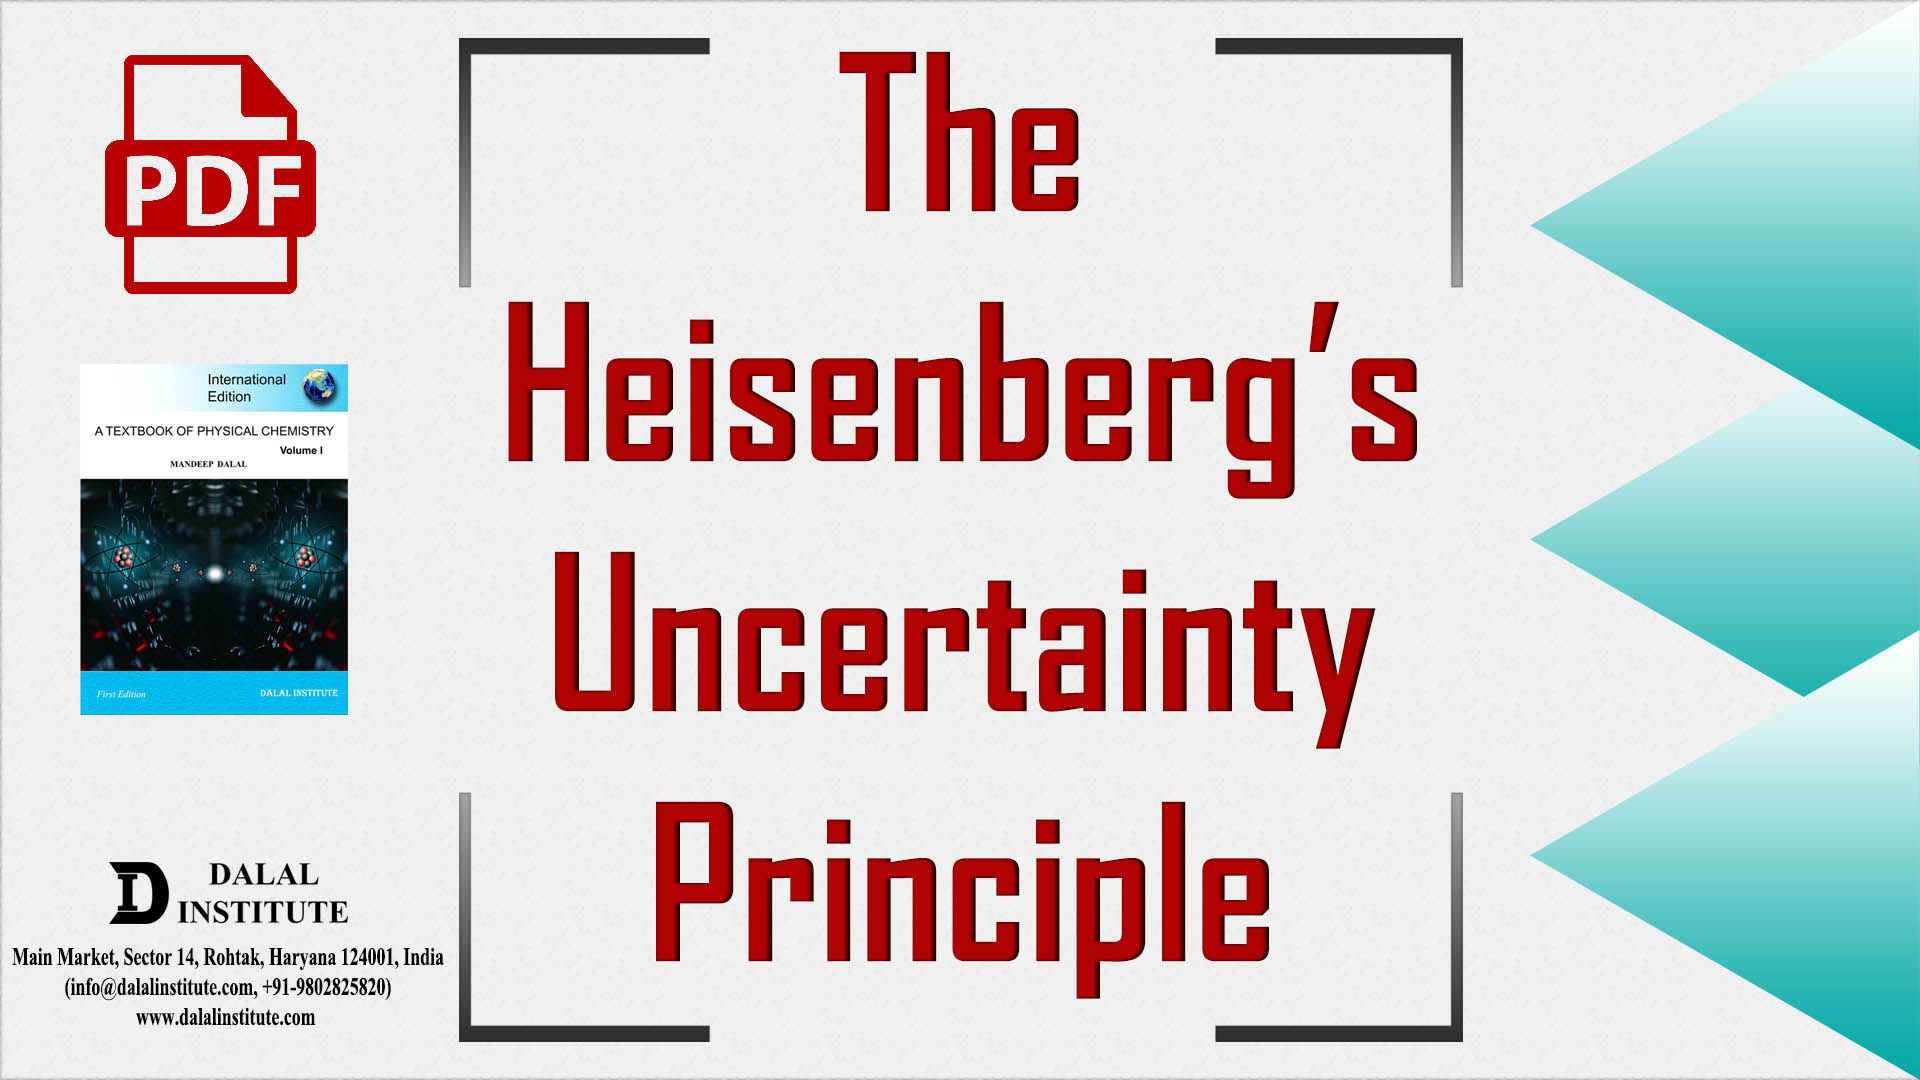 heisenberg principle for dummies